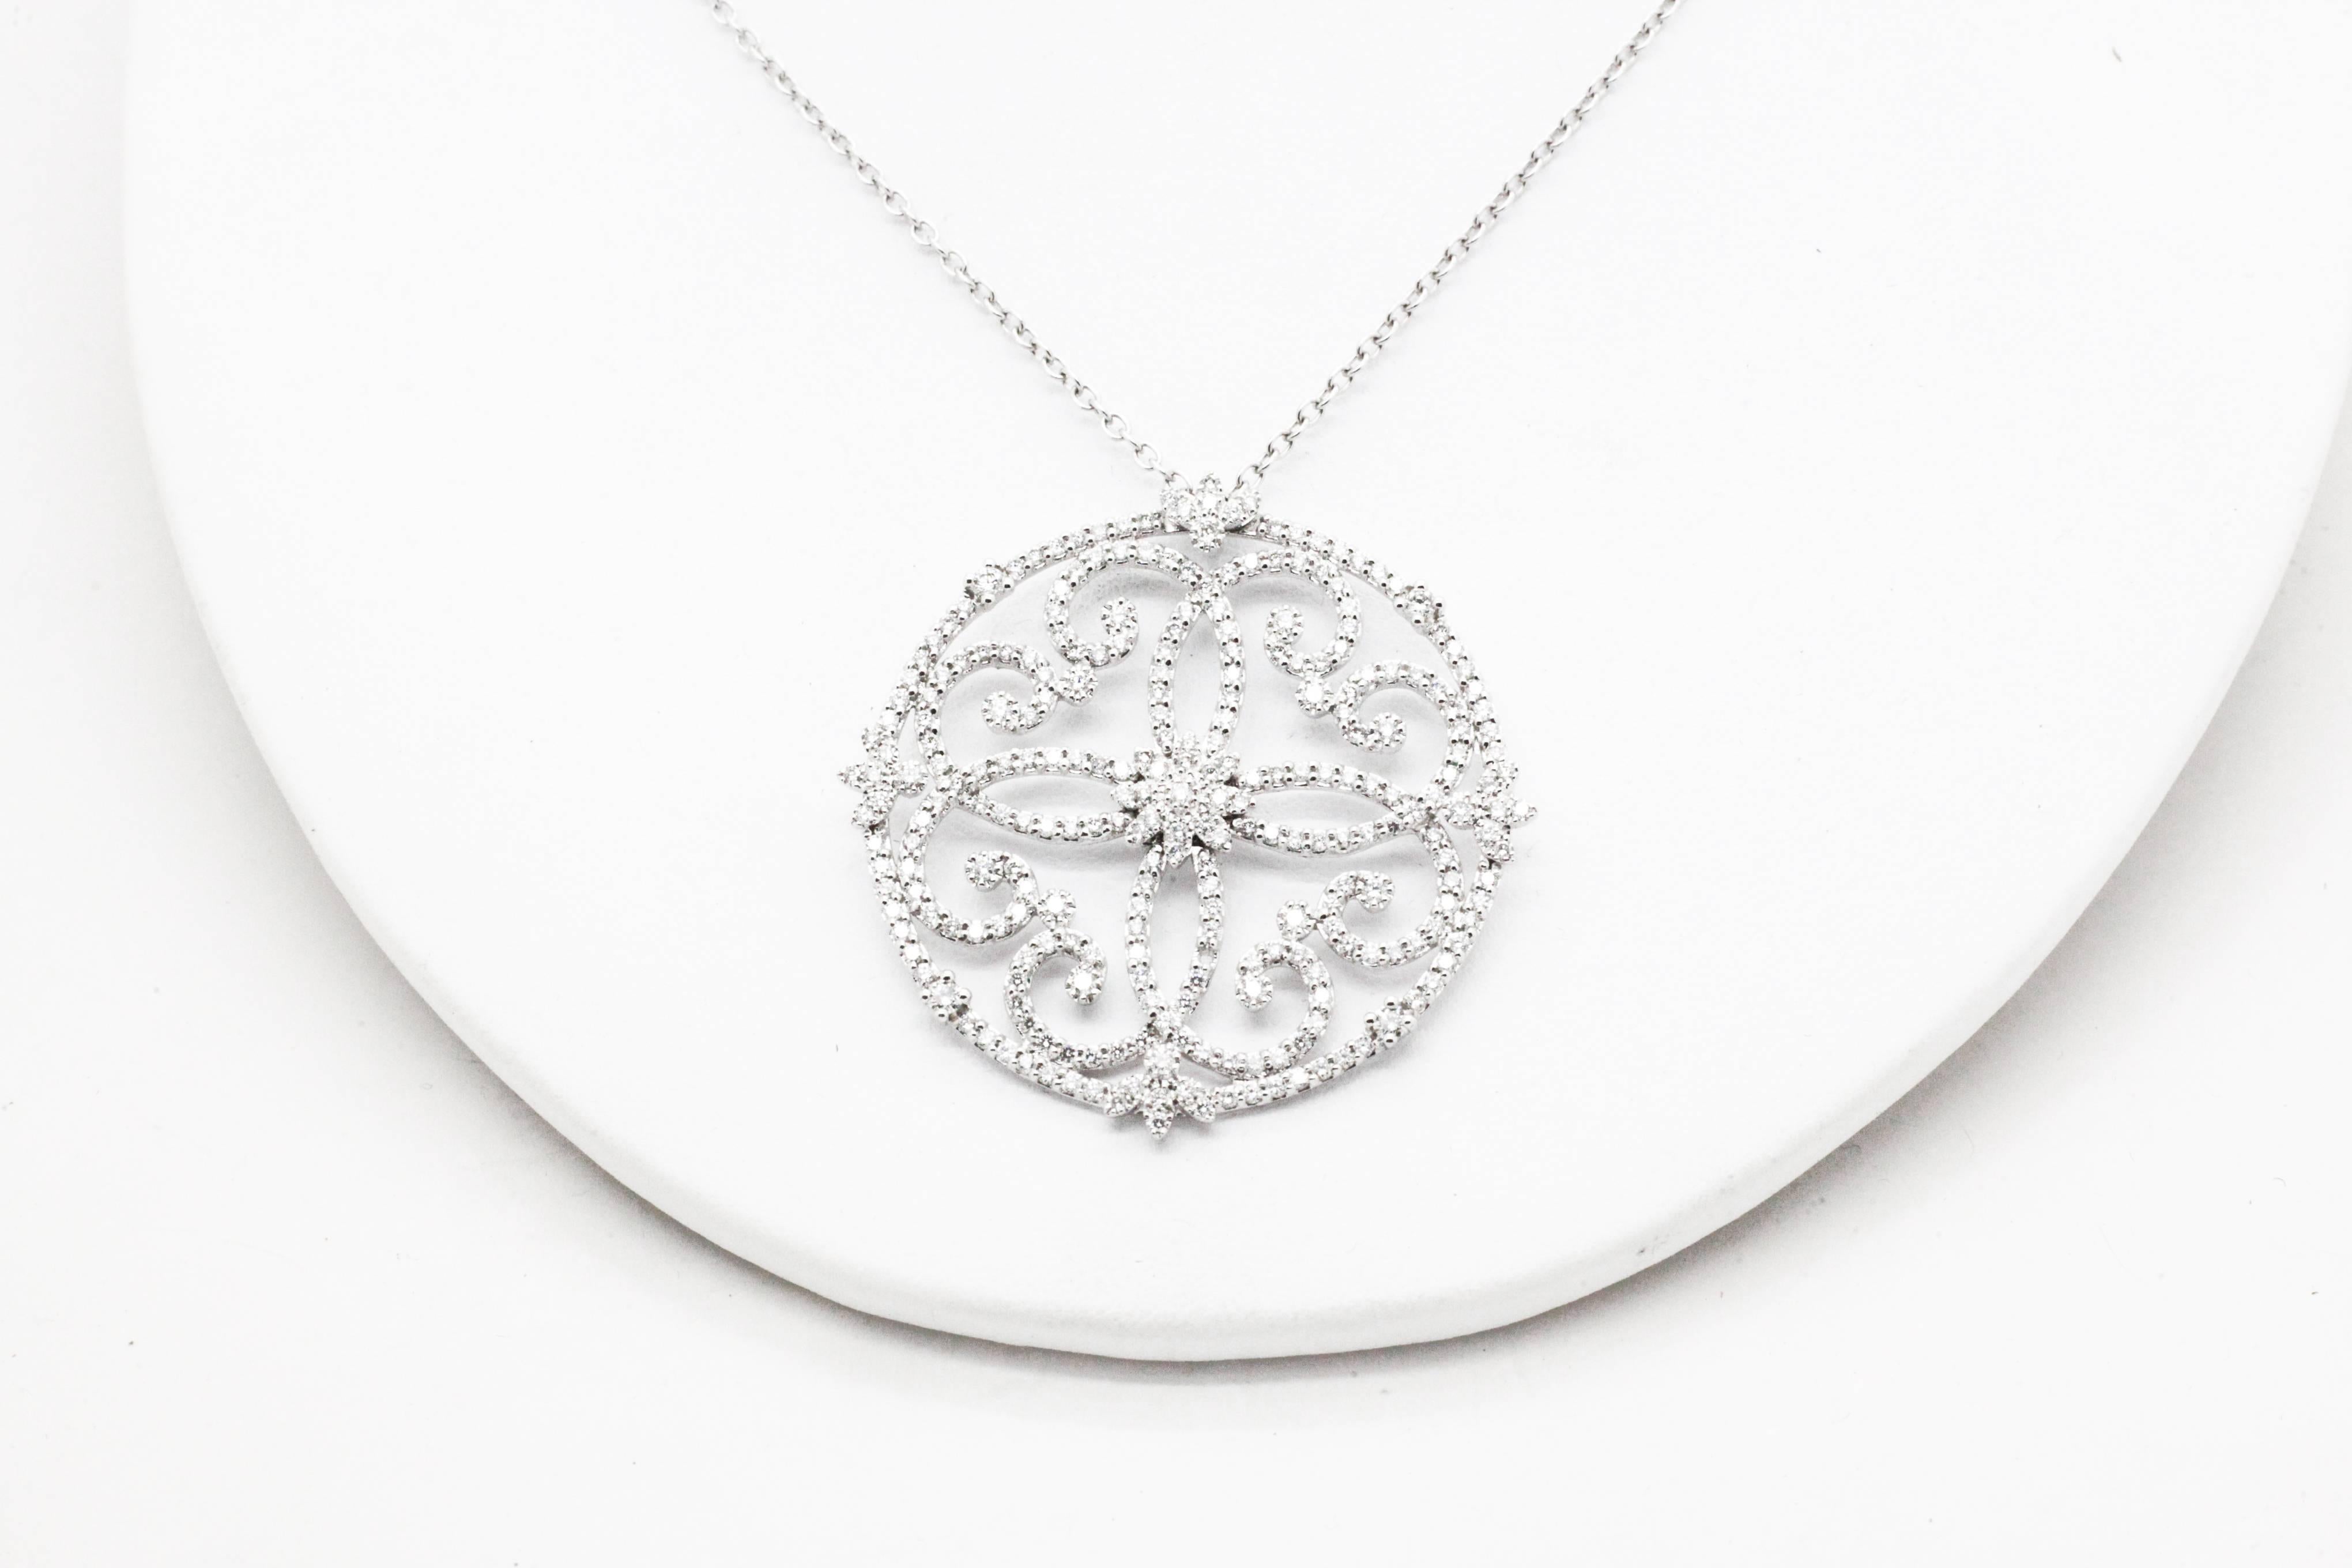 Ferrucci 2.75 Carat White Diamonds Necklace Handmade in 18 Karat White Gold 2